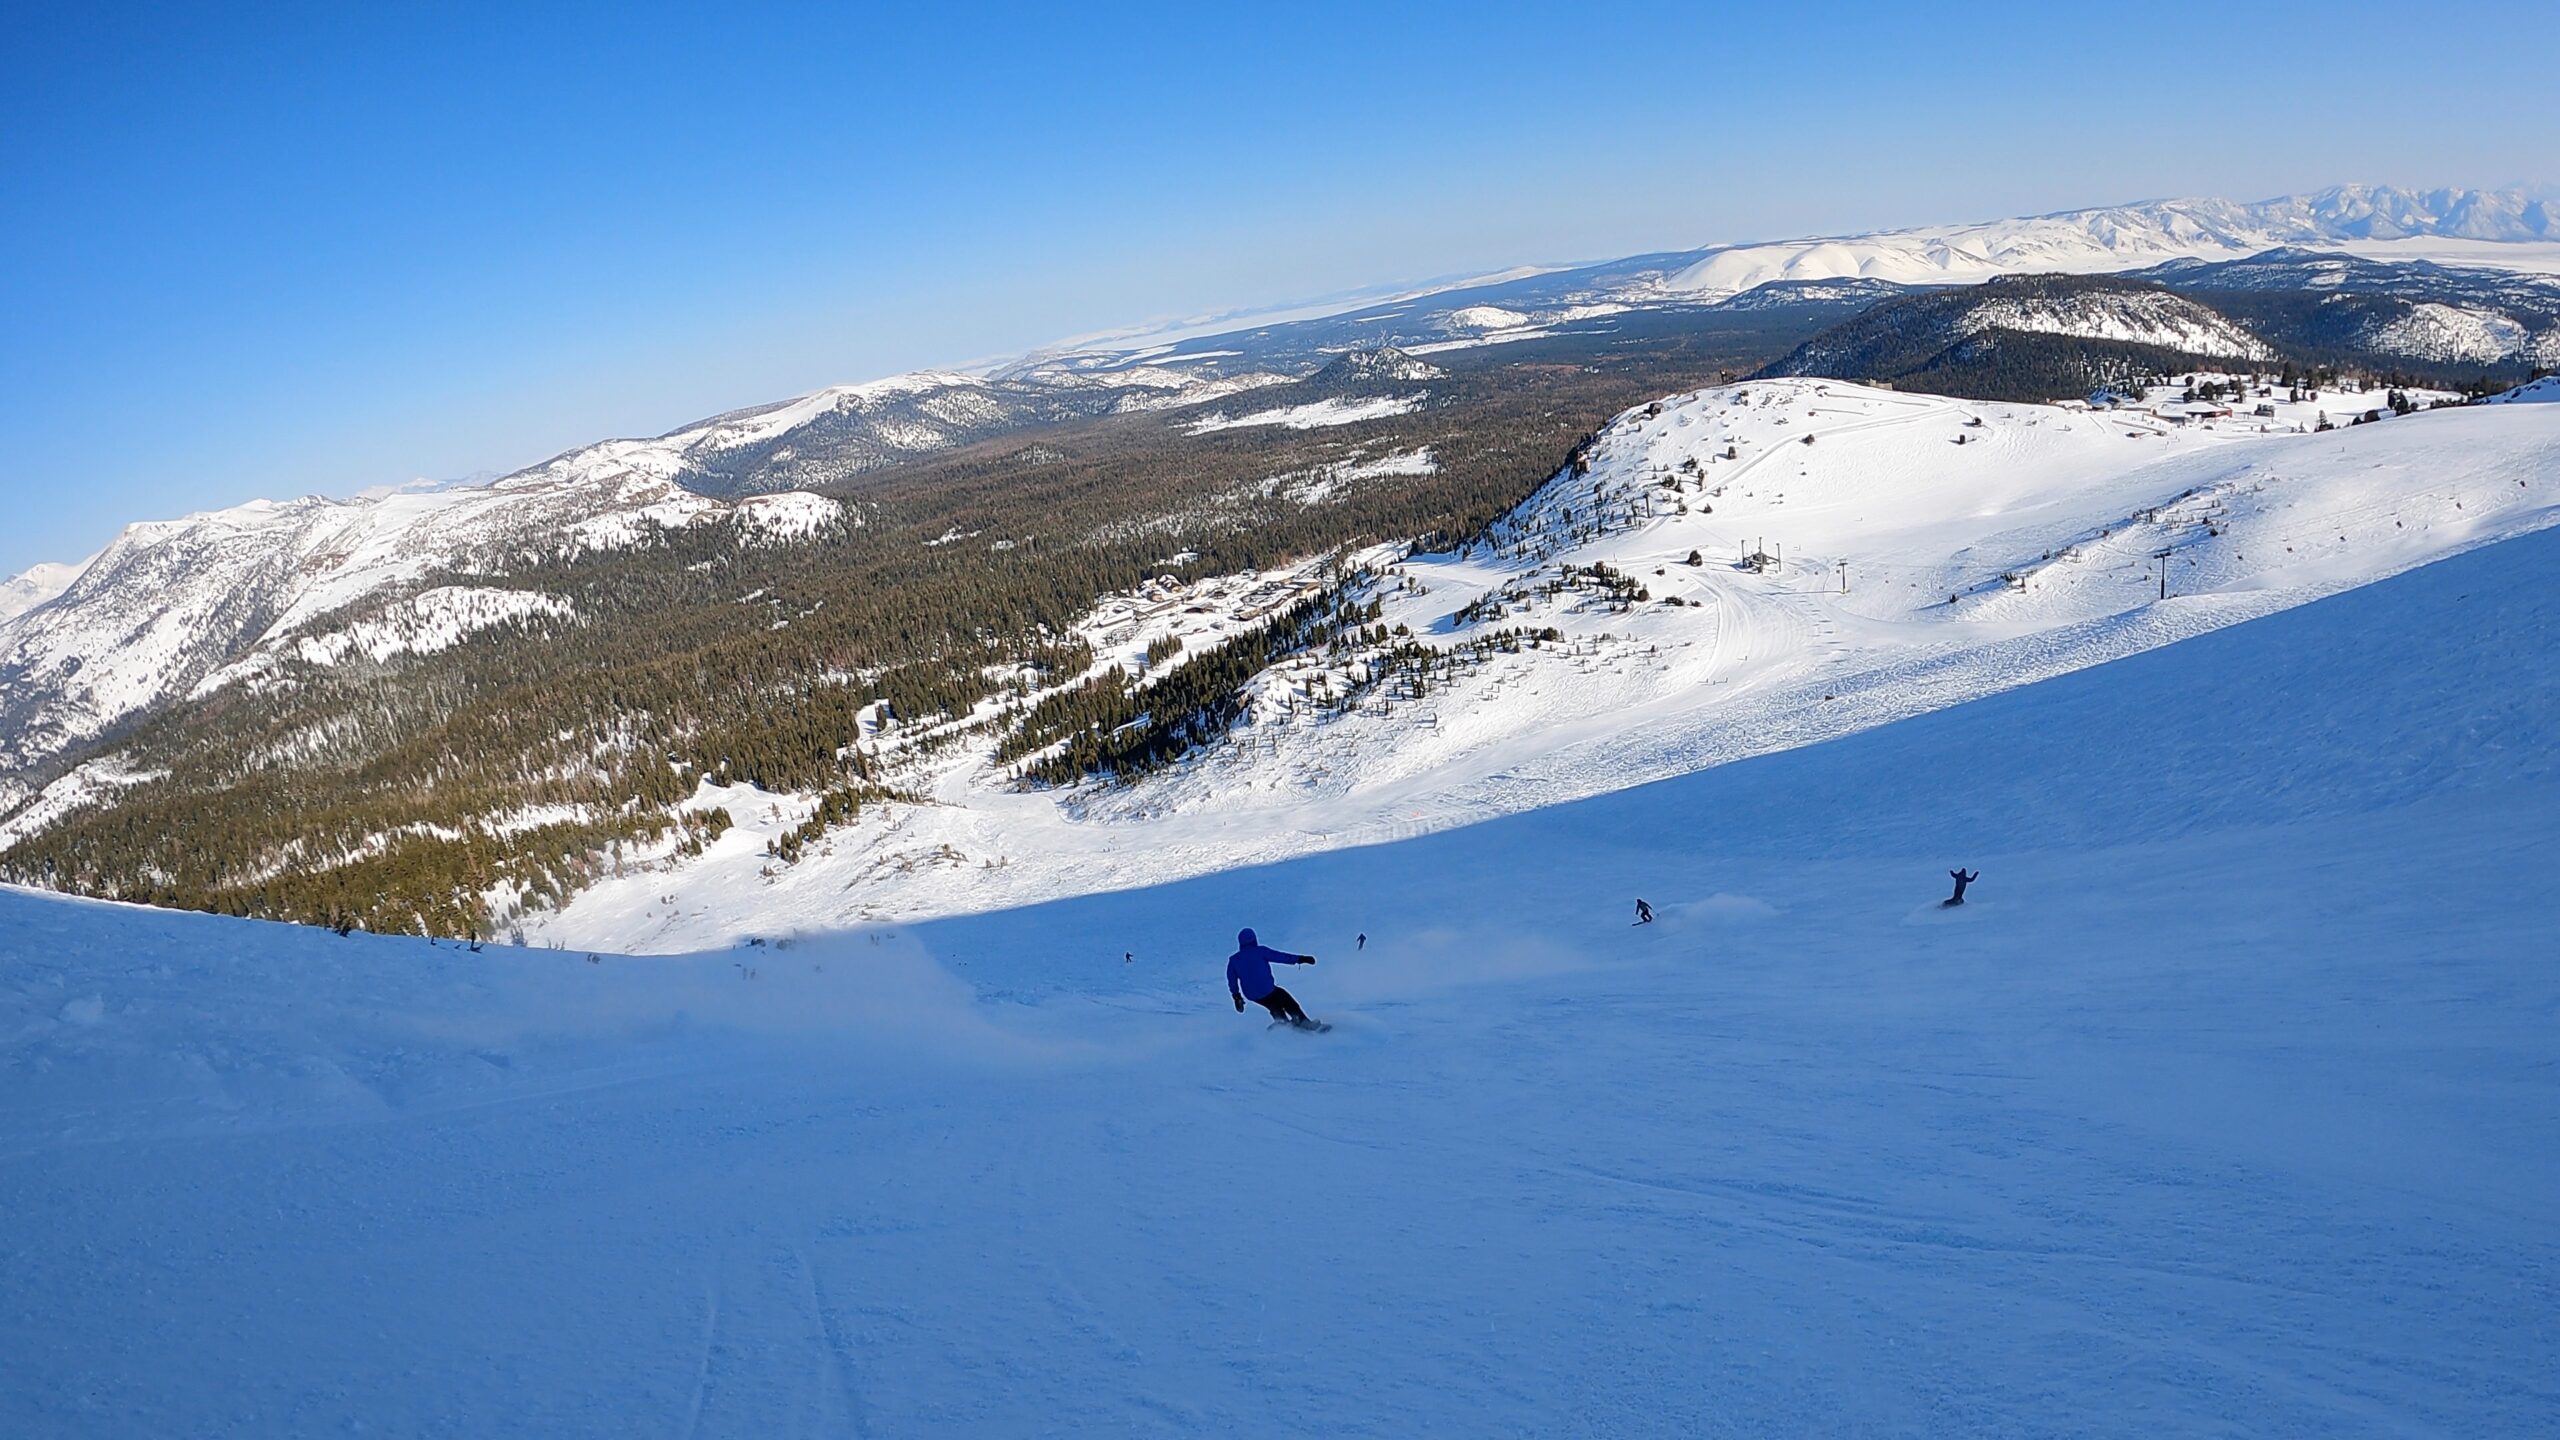 Long Winter Shadows on Scotties - Dougie Fresh on the Snowboard